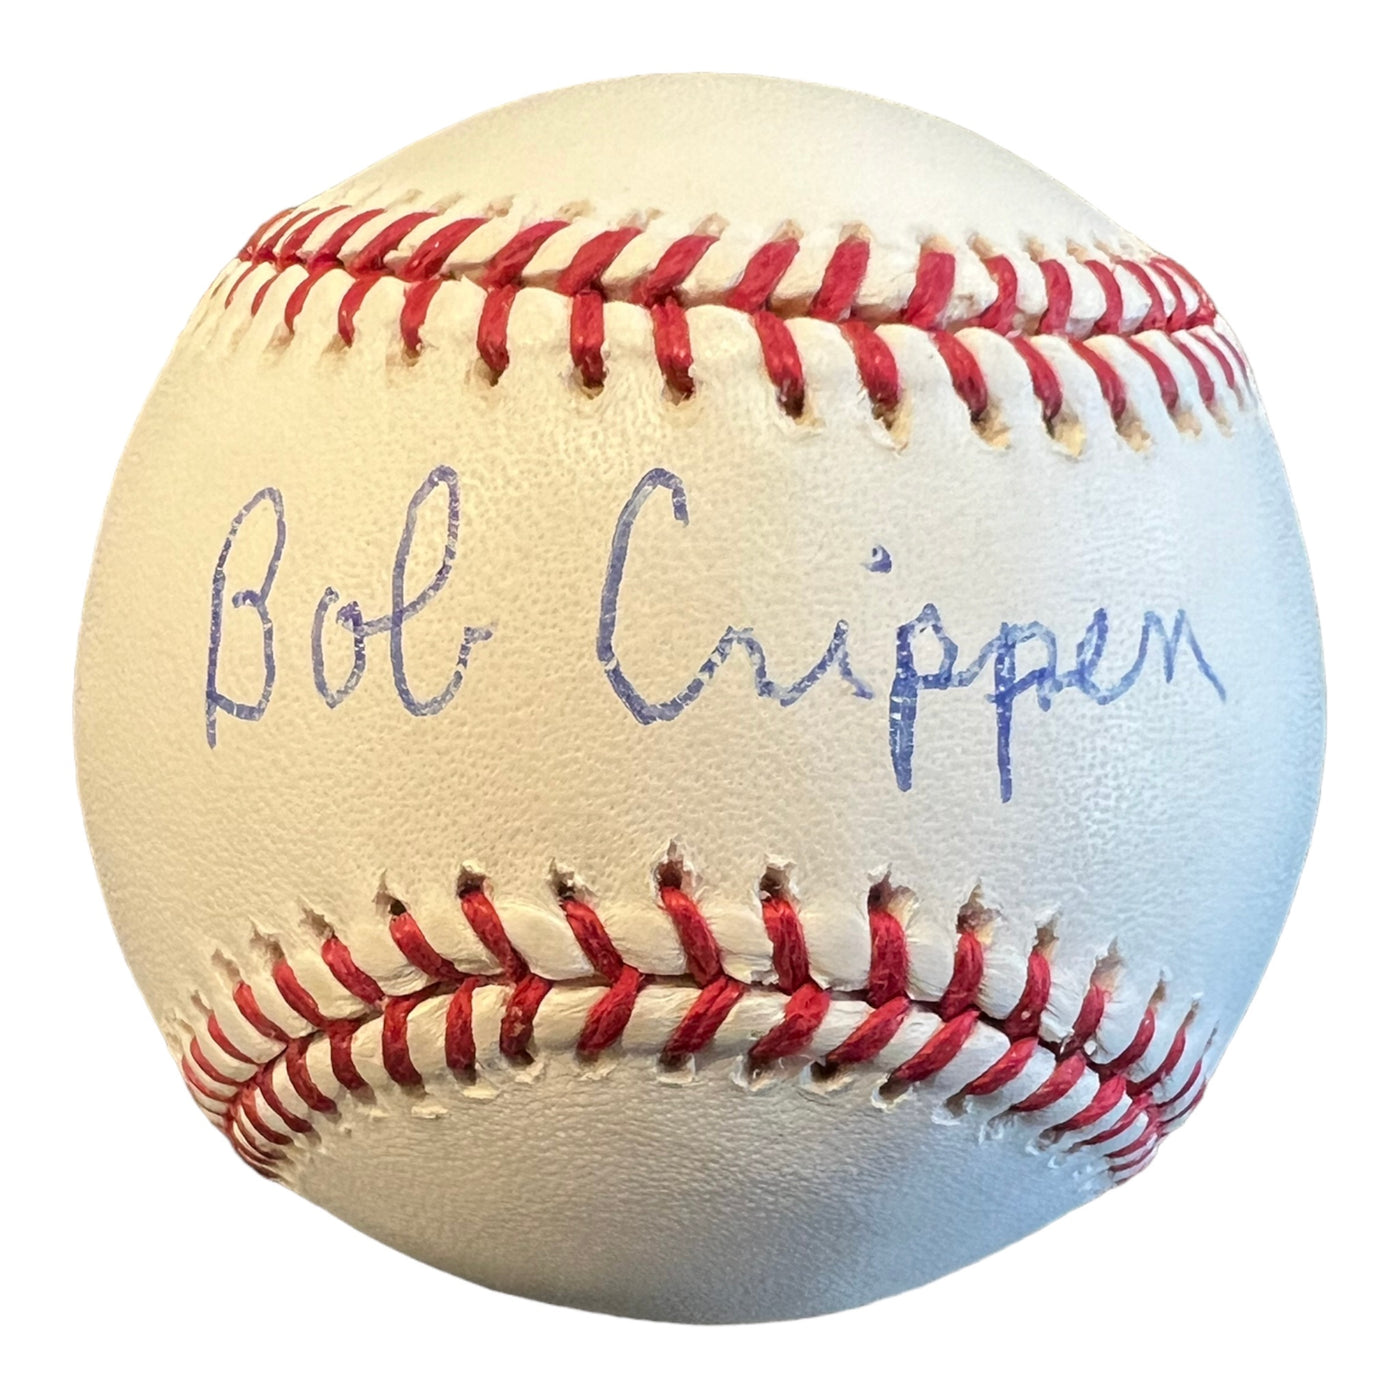 Bob Crippen – baseball